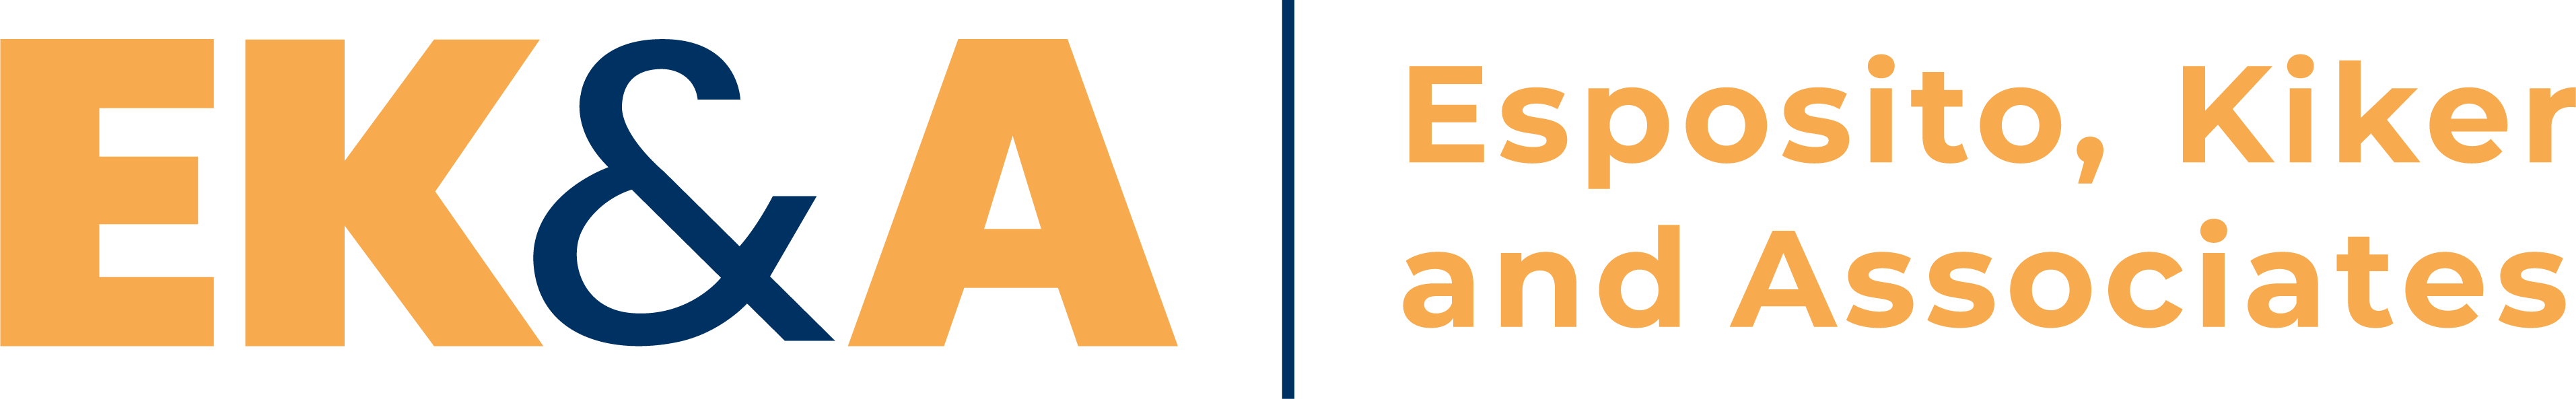 Esposito Kiker and Associates Logo